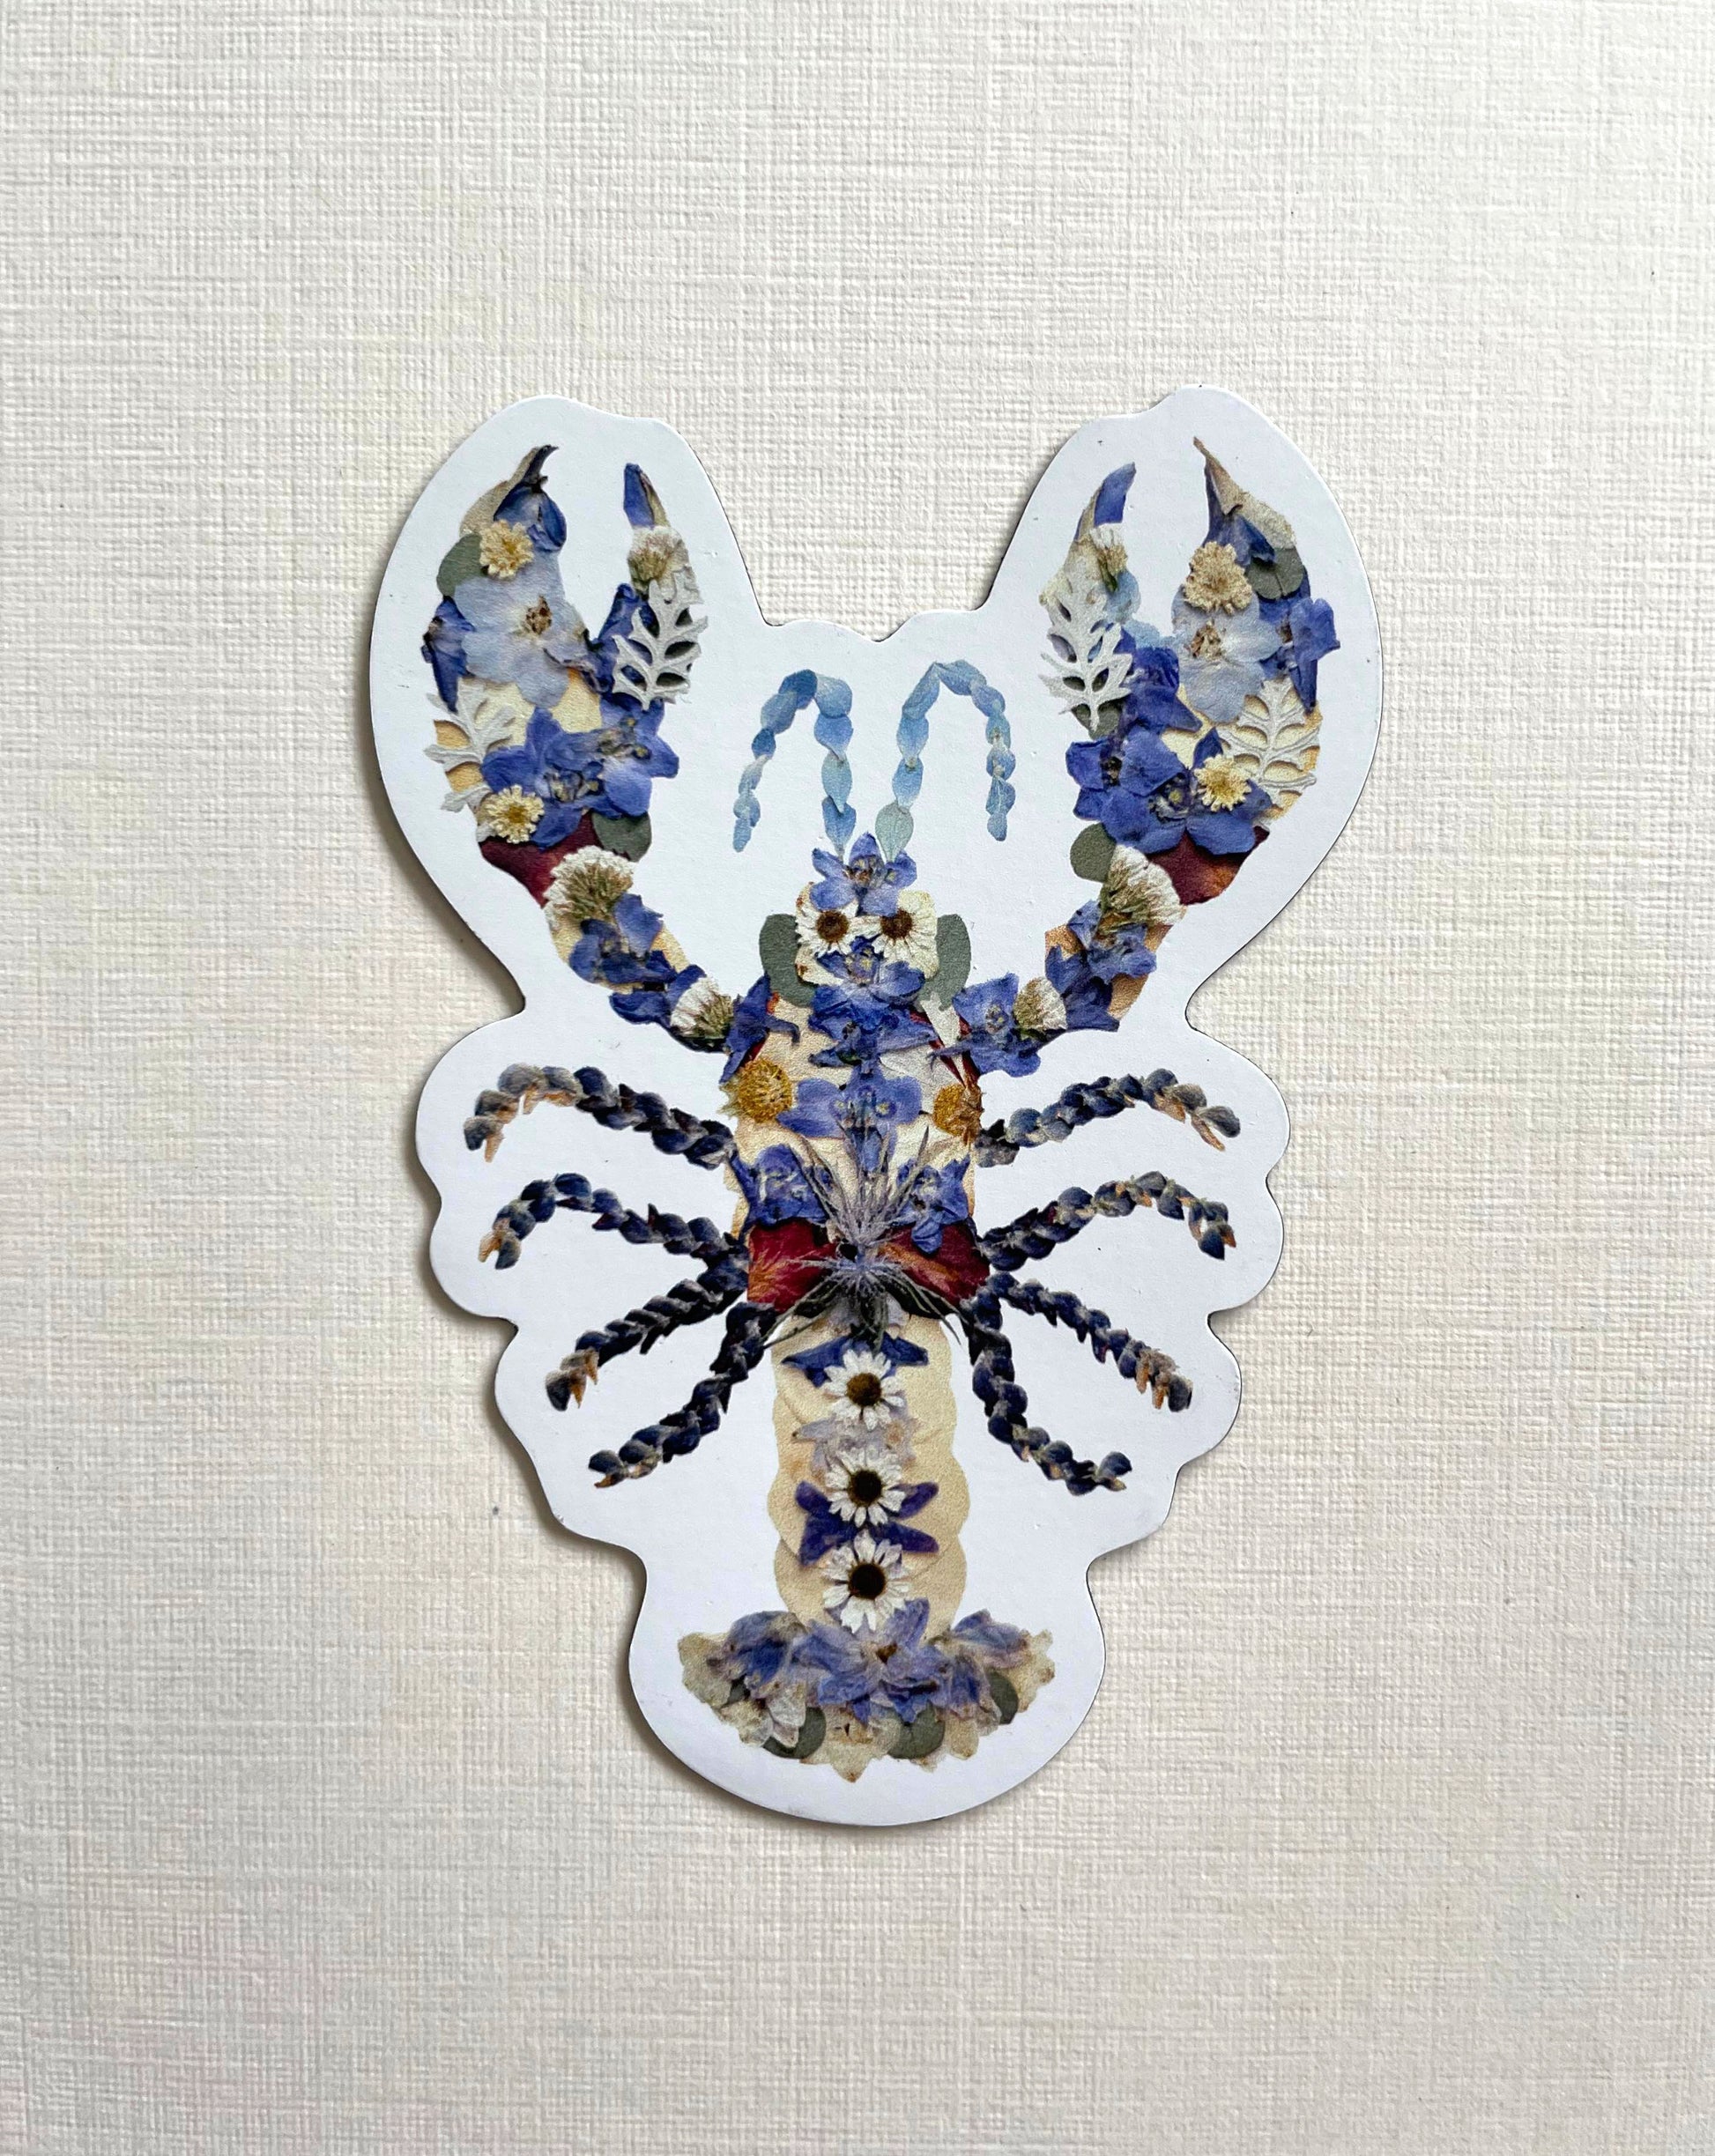 blue lobster pressed flower artwork nova scotia